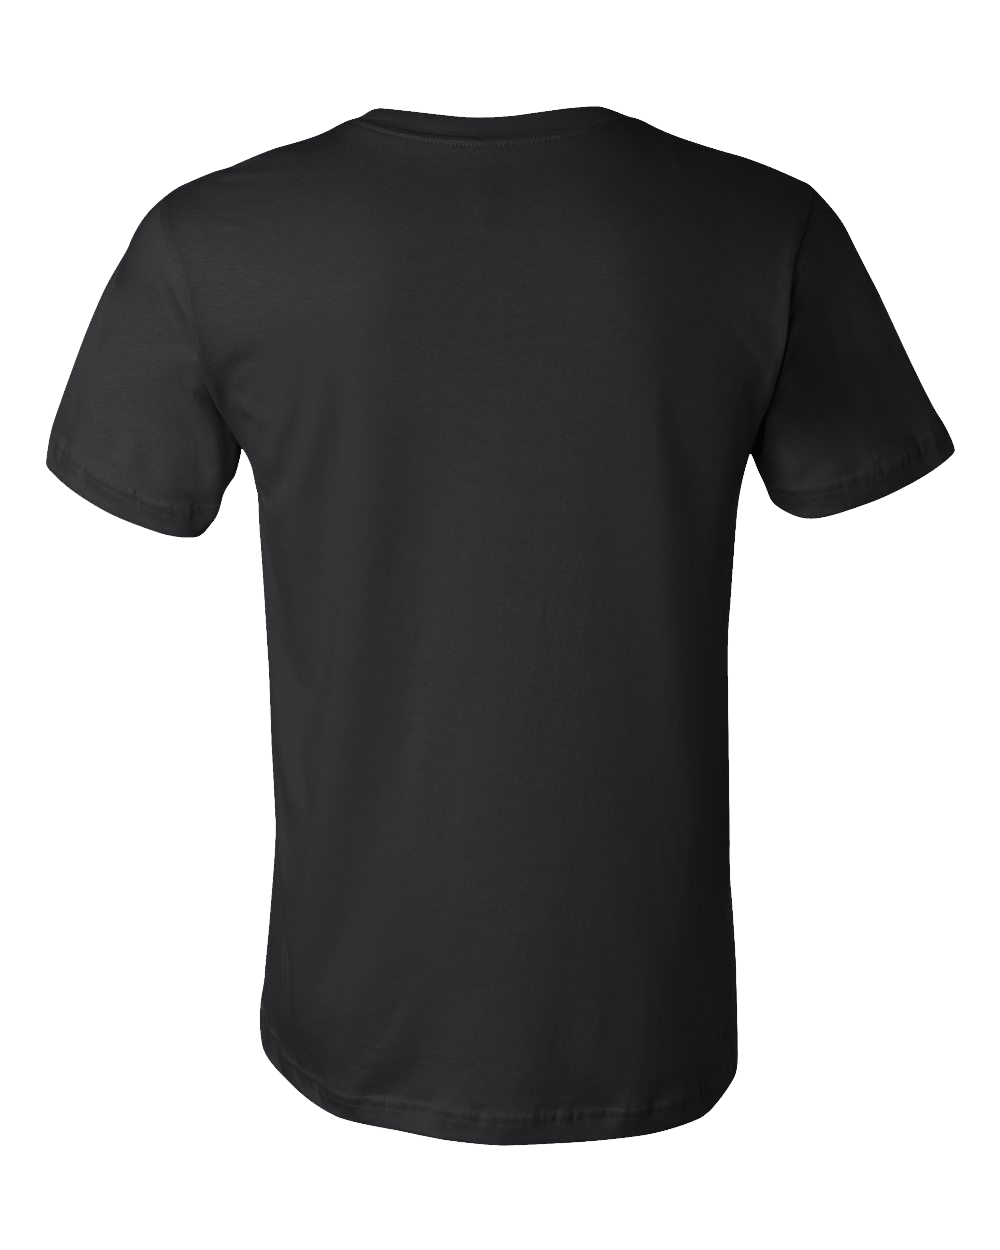 Standard Black Auburn, IL | Retro, Vintage Style Illinois Pride  T-shirt